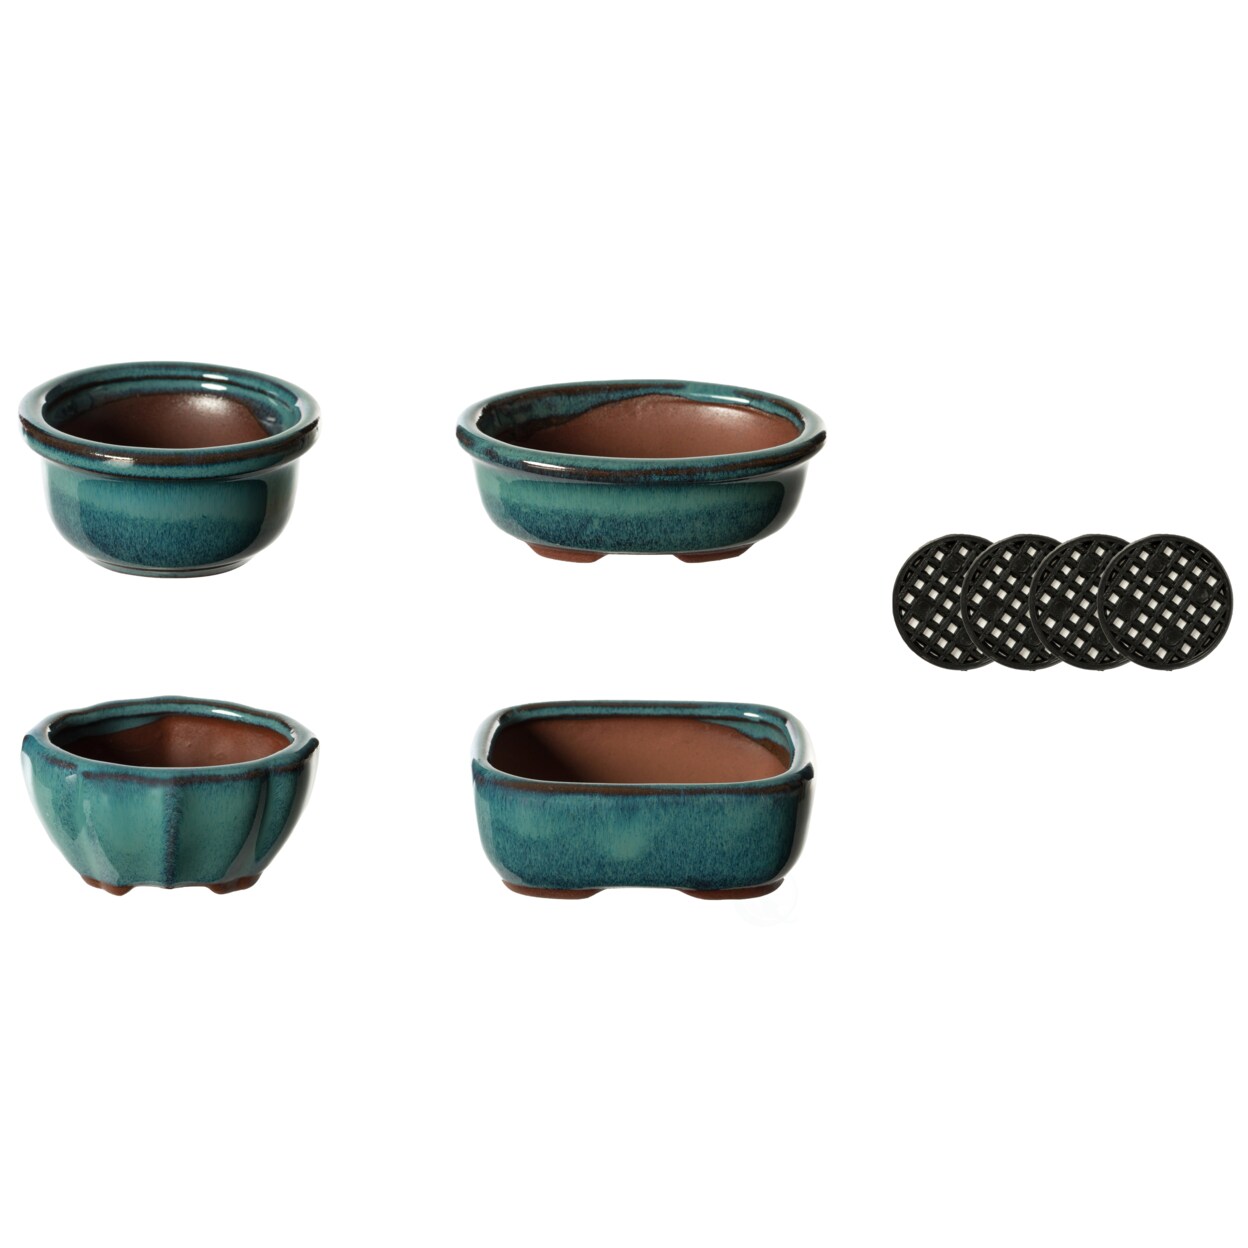 Gardenised Decorative Mini Glazed Ceramic Bonsai Succulent Pots Flower Planter with Drainage Holes 4 Pack